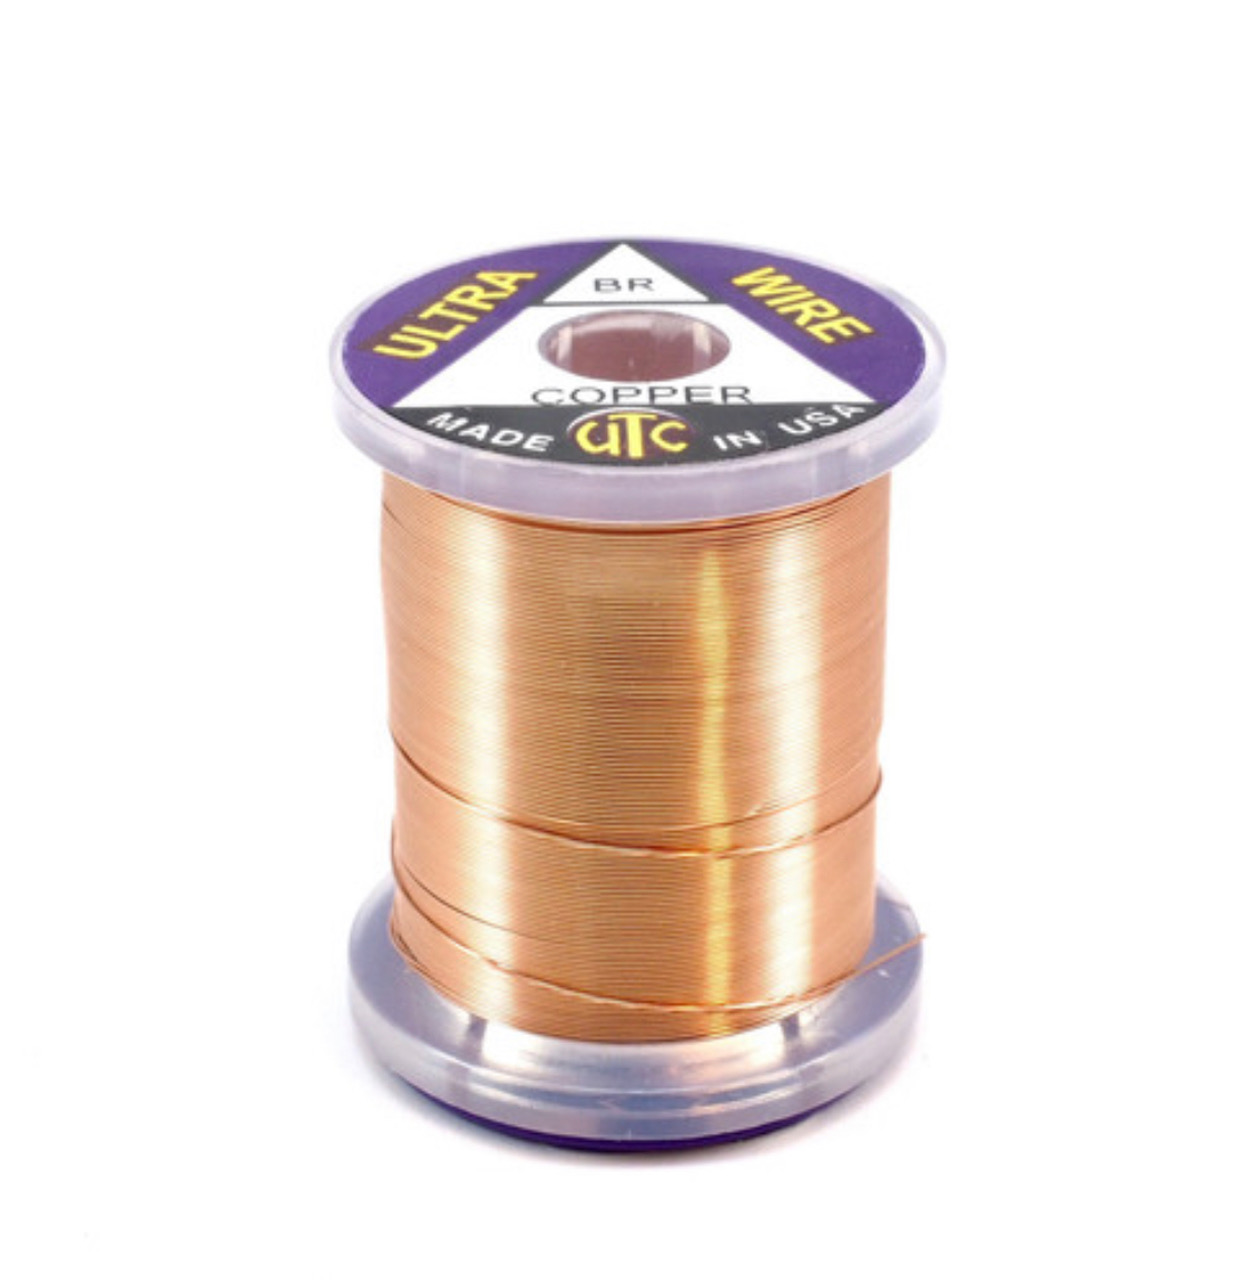 UTC Ultra Wire - Medium - Copper